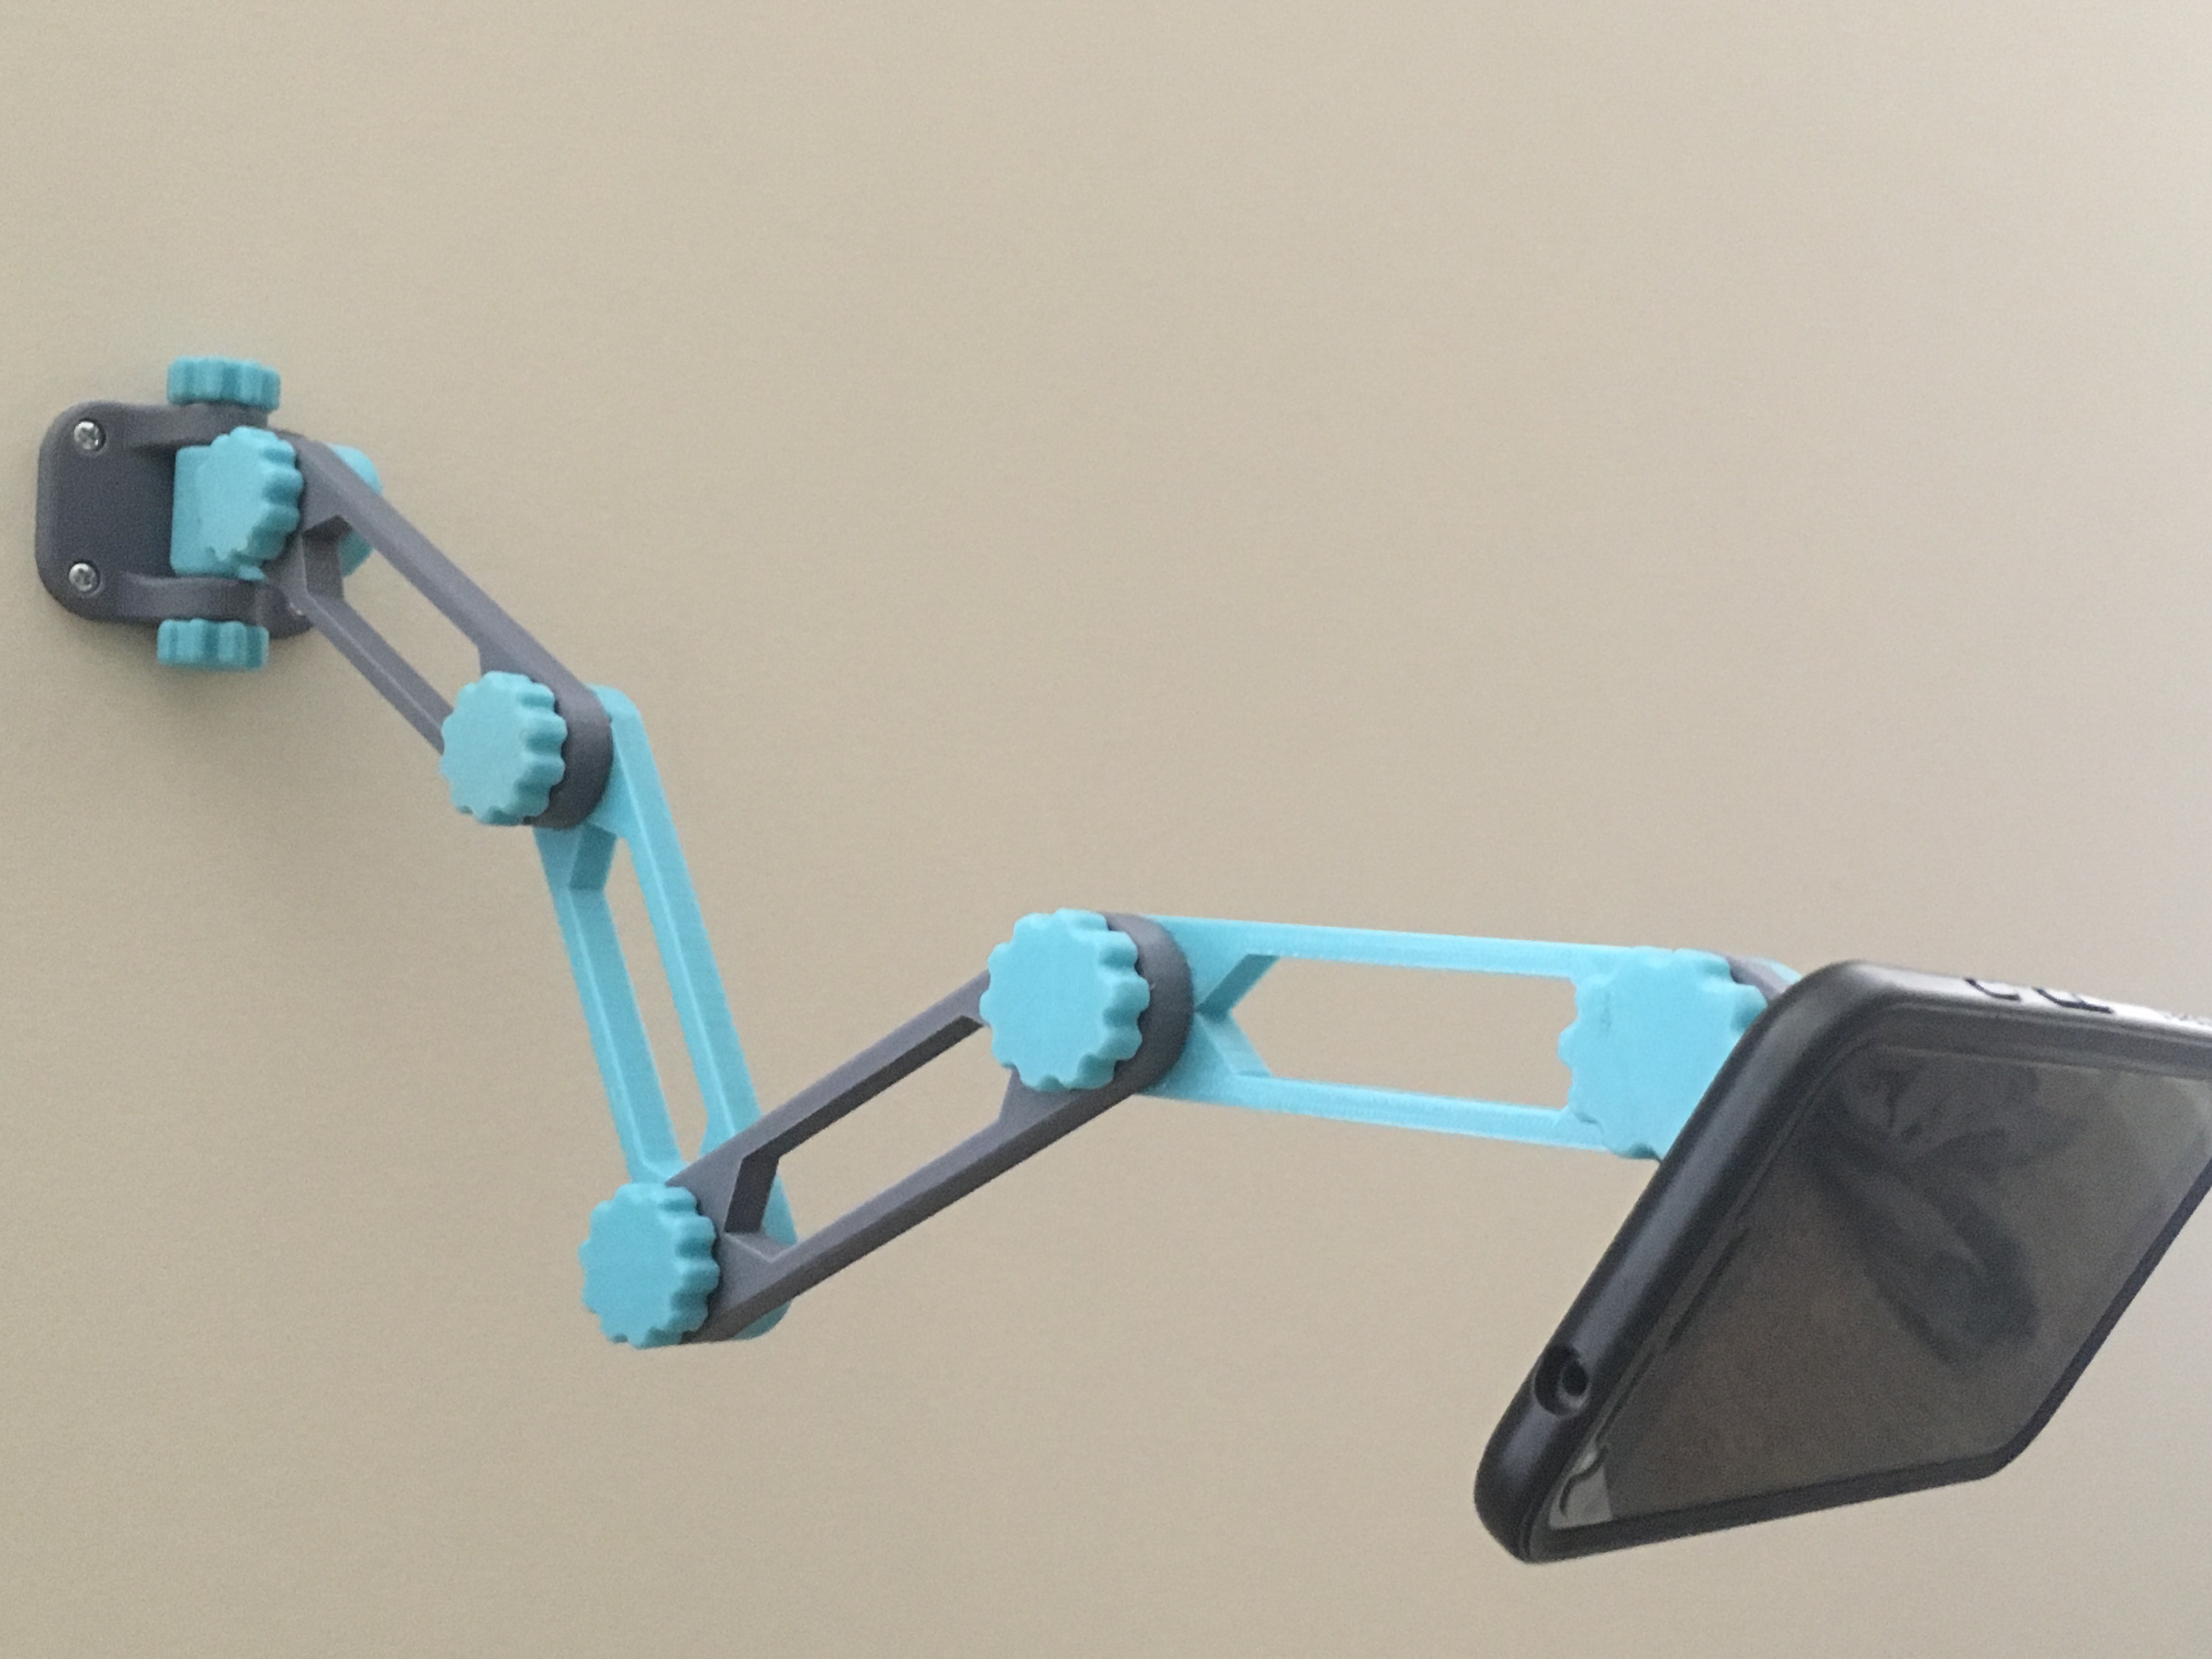 3D Printed Articulating, Magnetic Phone Mount by Haynie | Pinshape